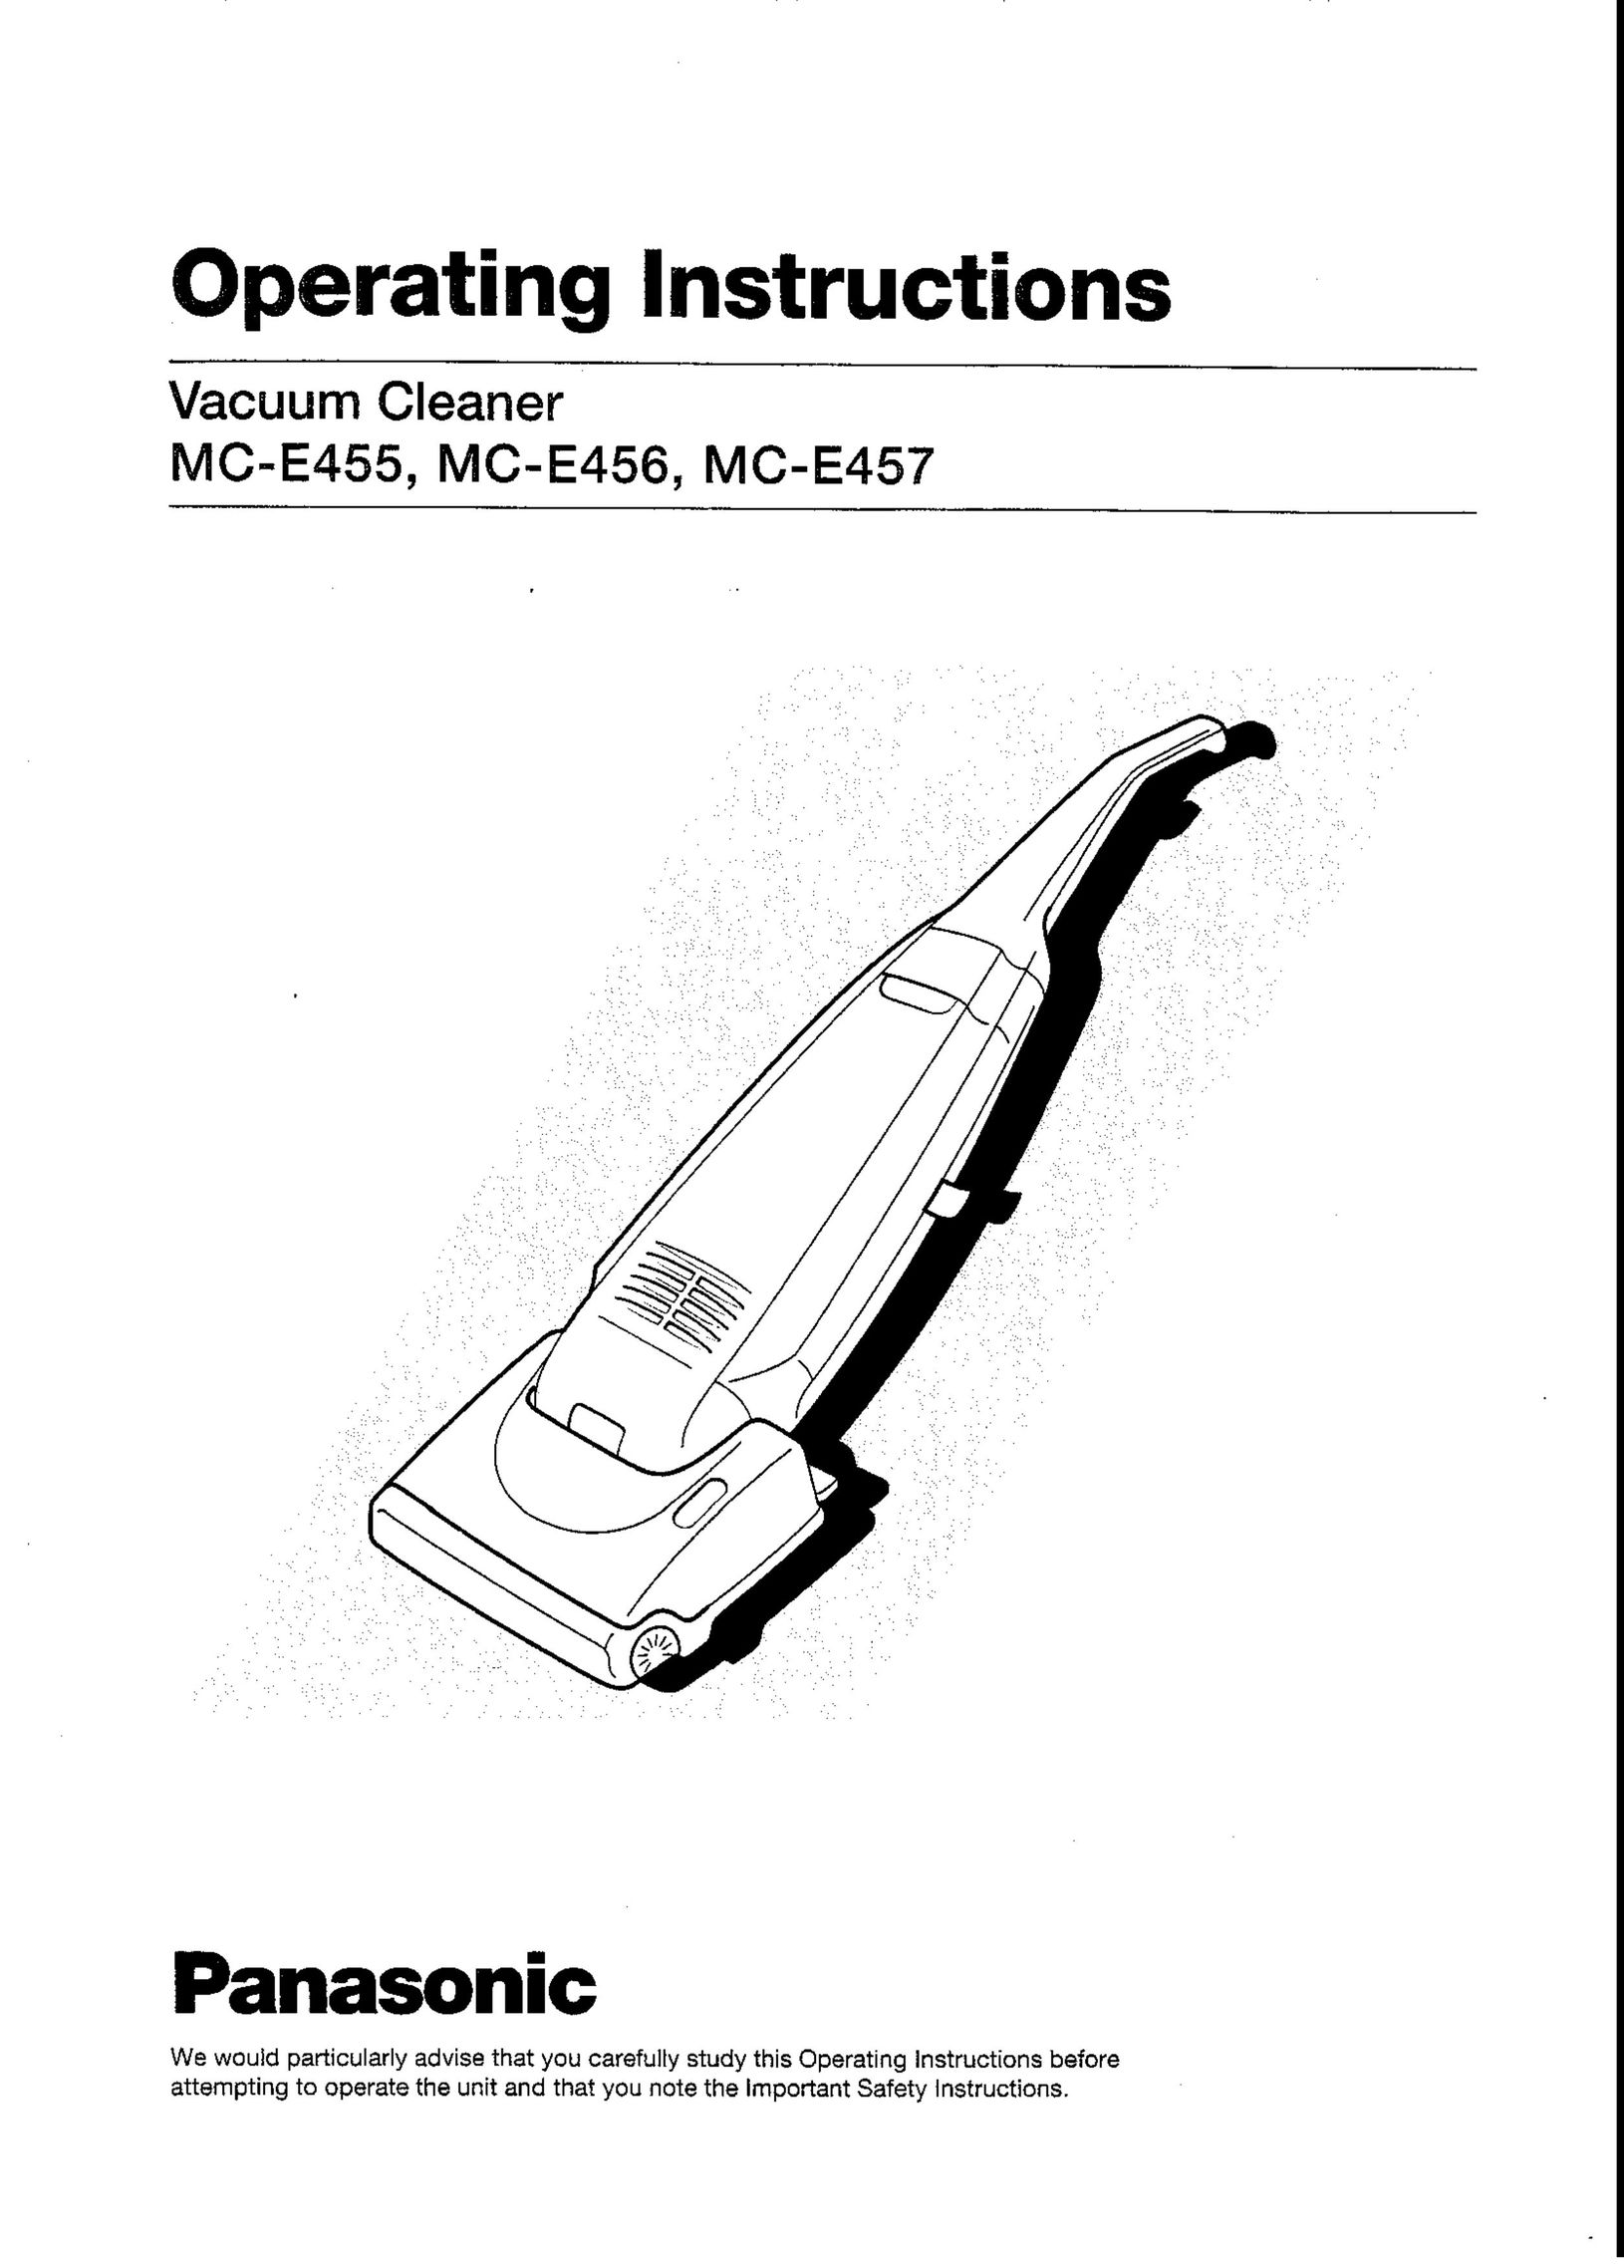 Panasonic MC-E456 Vacuum Cleaner User Manual